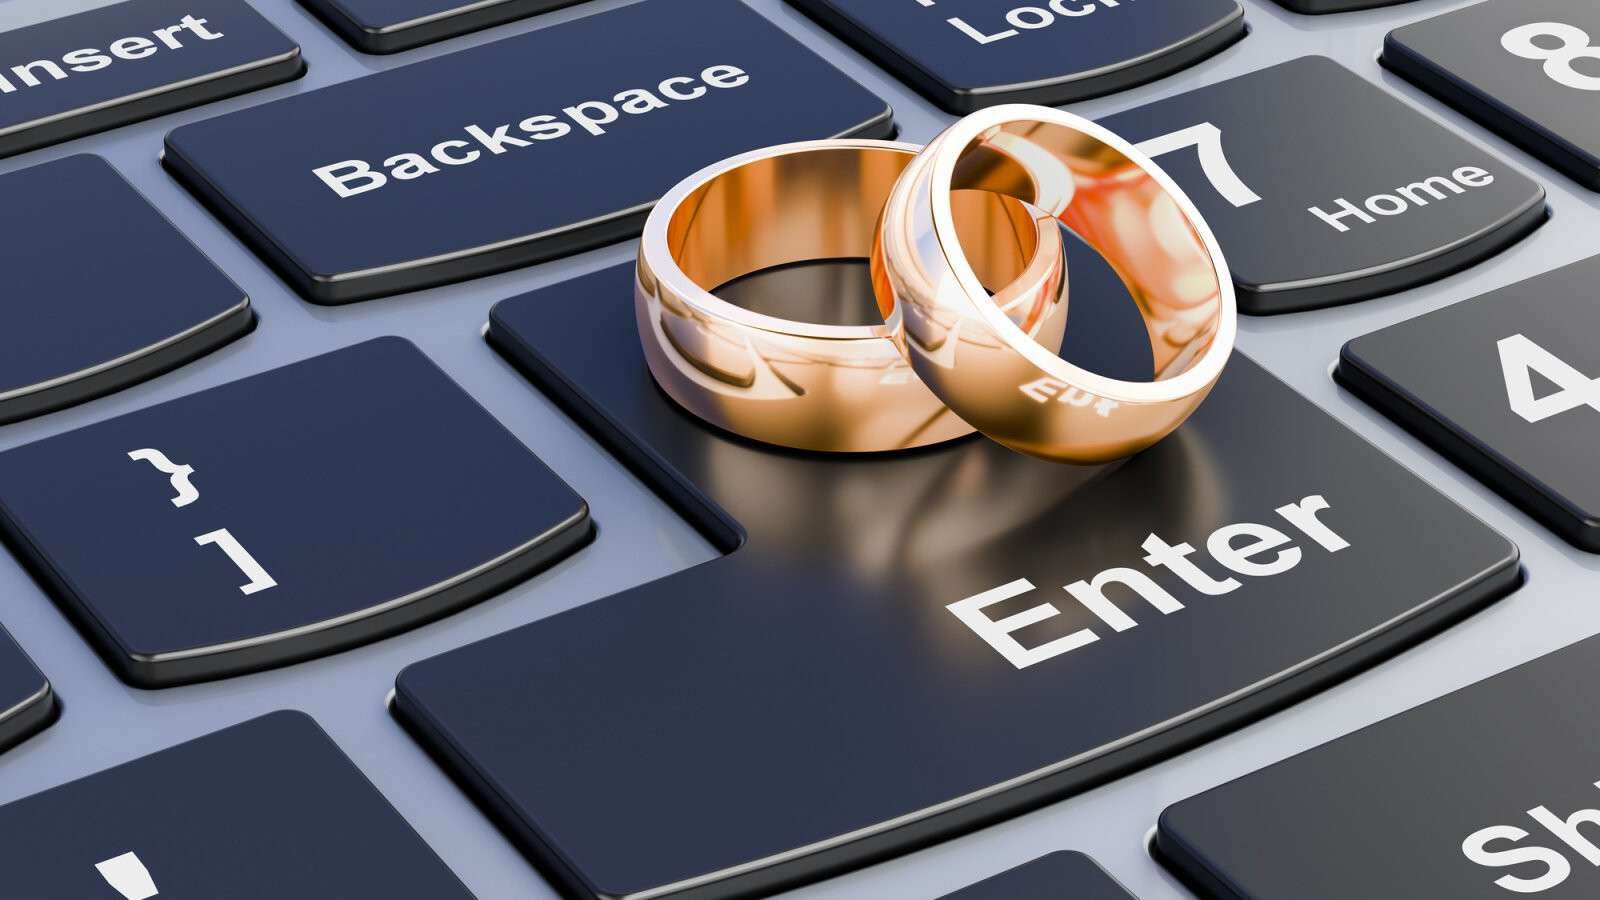 онлайн-одруження